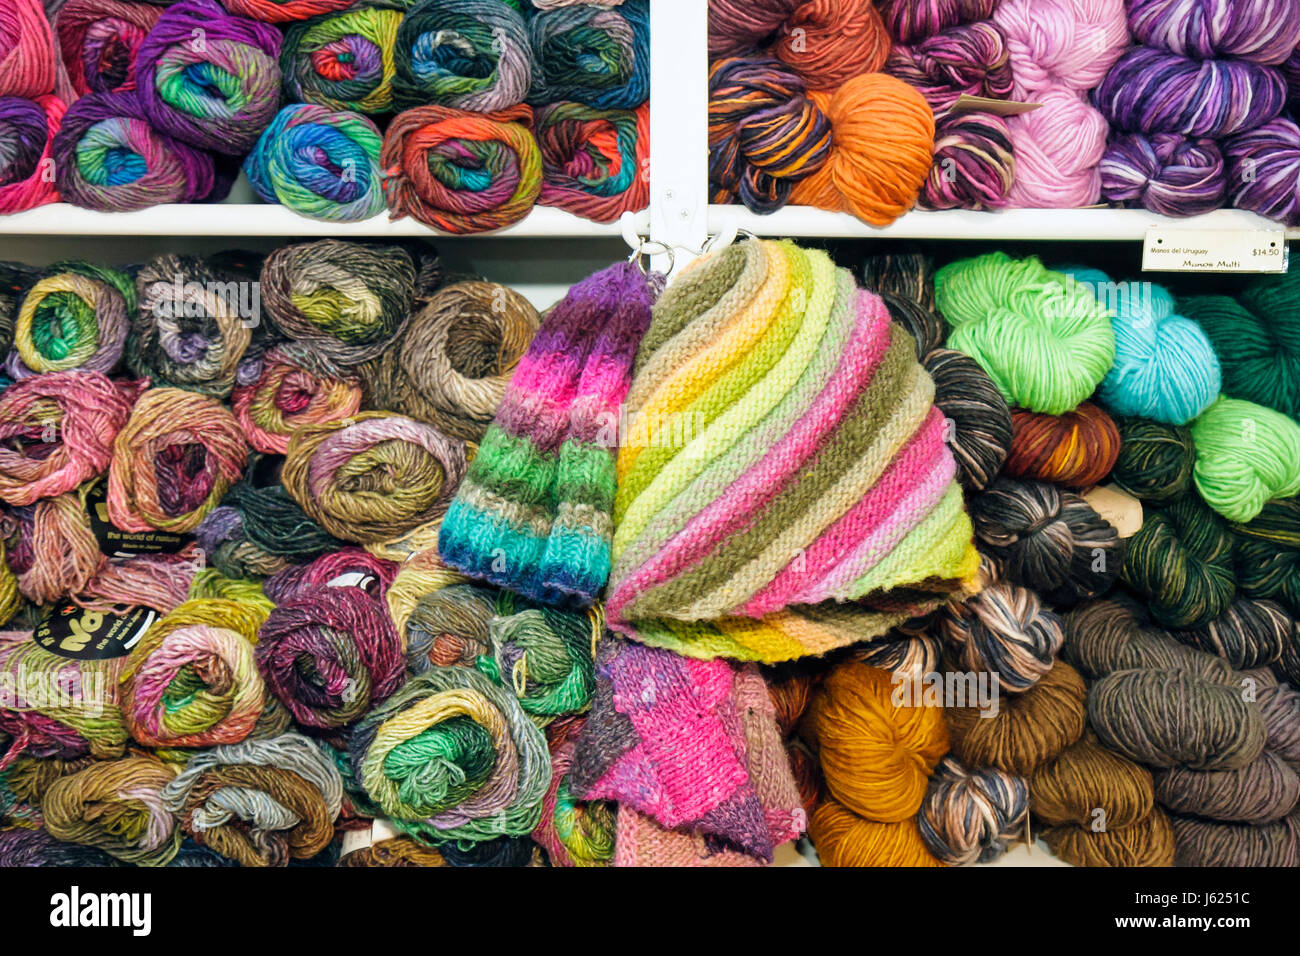 Valparaiso Indiana,Sheep's Clothing,knitting supplies,yarn,wool,multi color,craft,hobby,display sale shopping shopper shoppers shop shops market marke Stock Photo